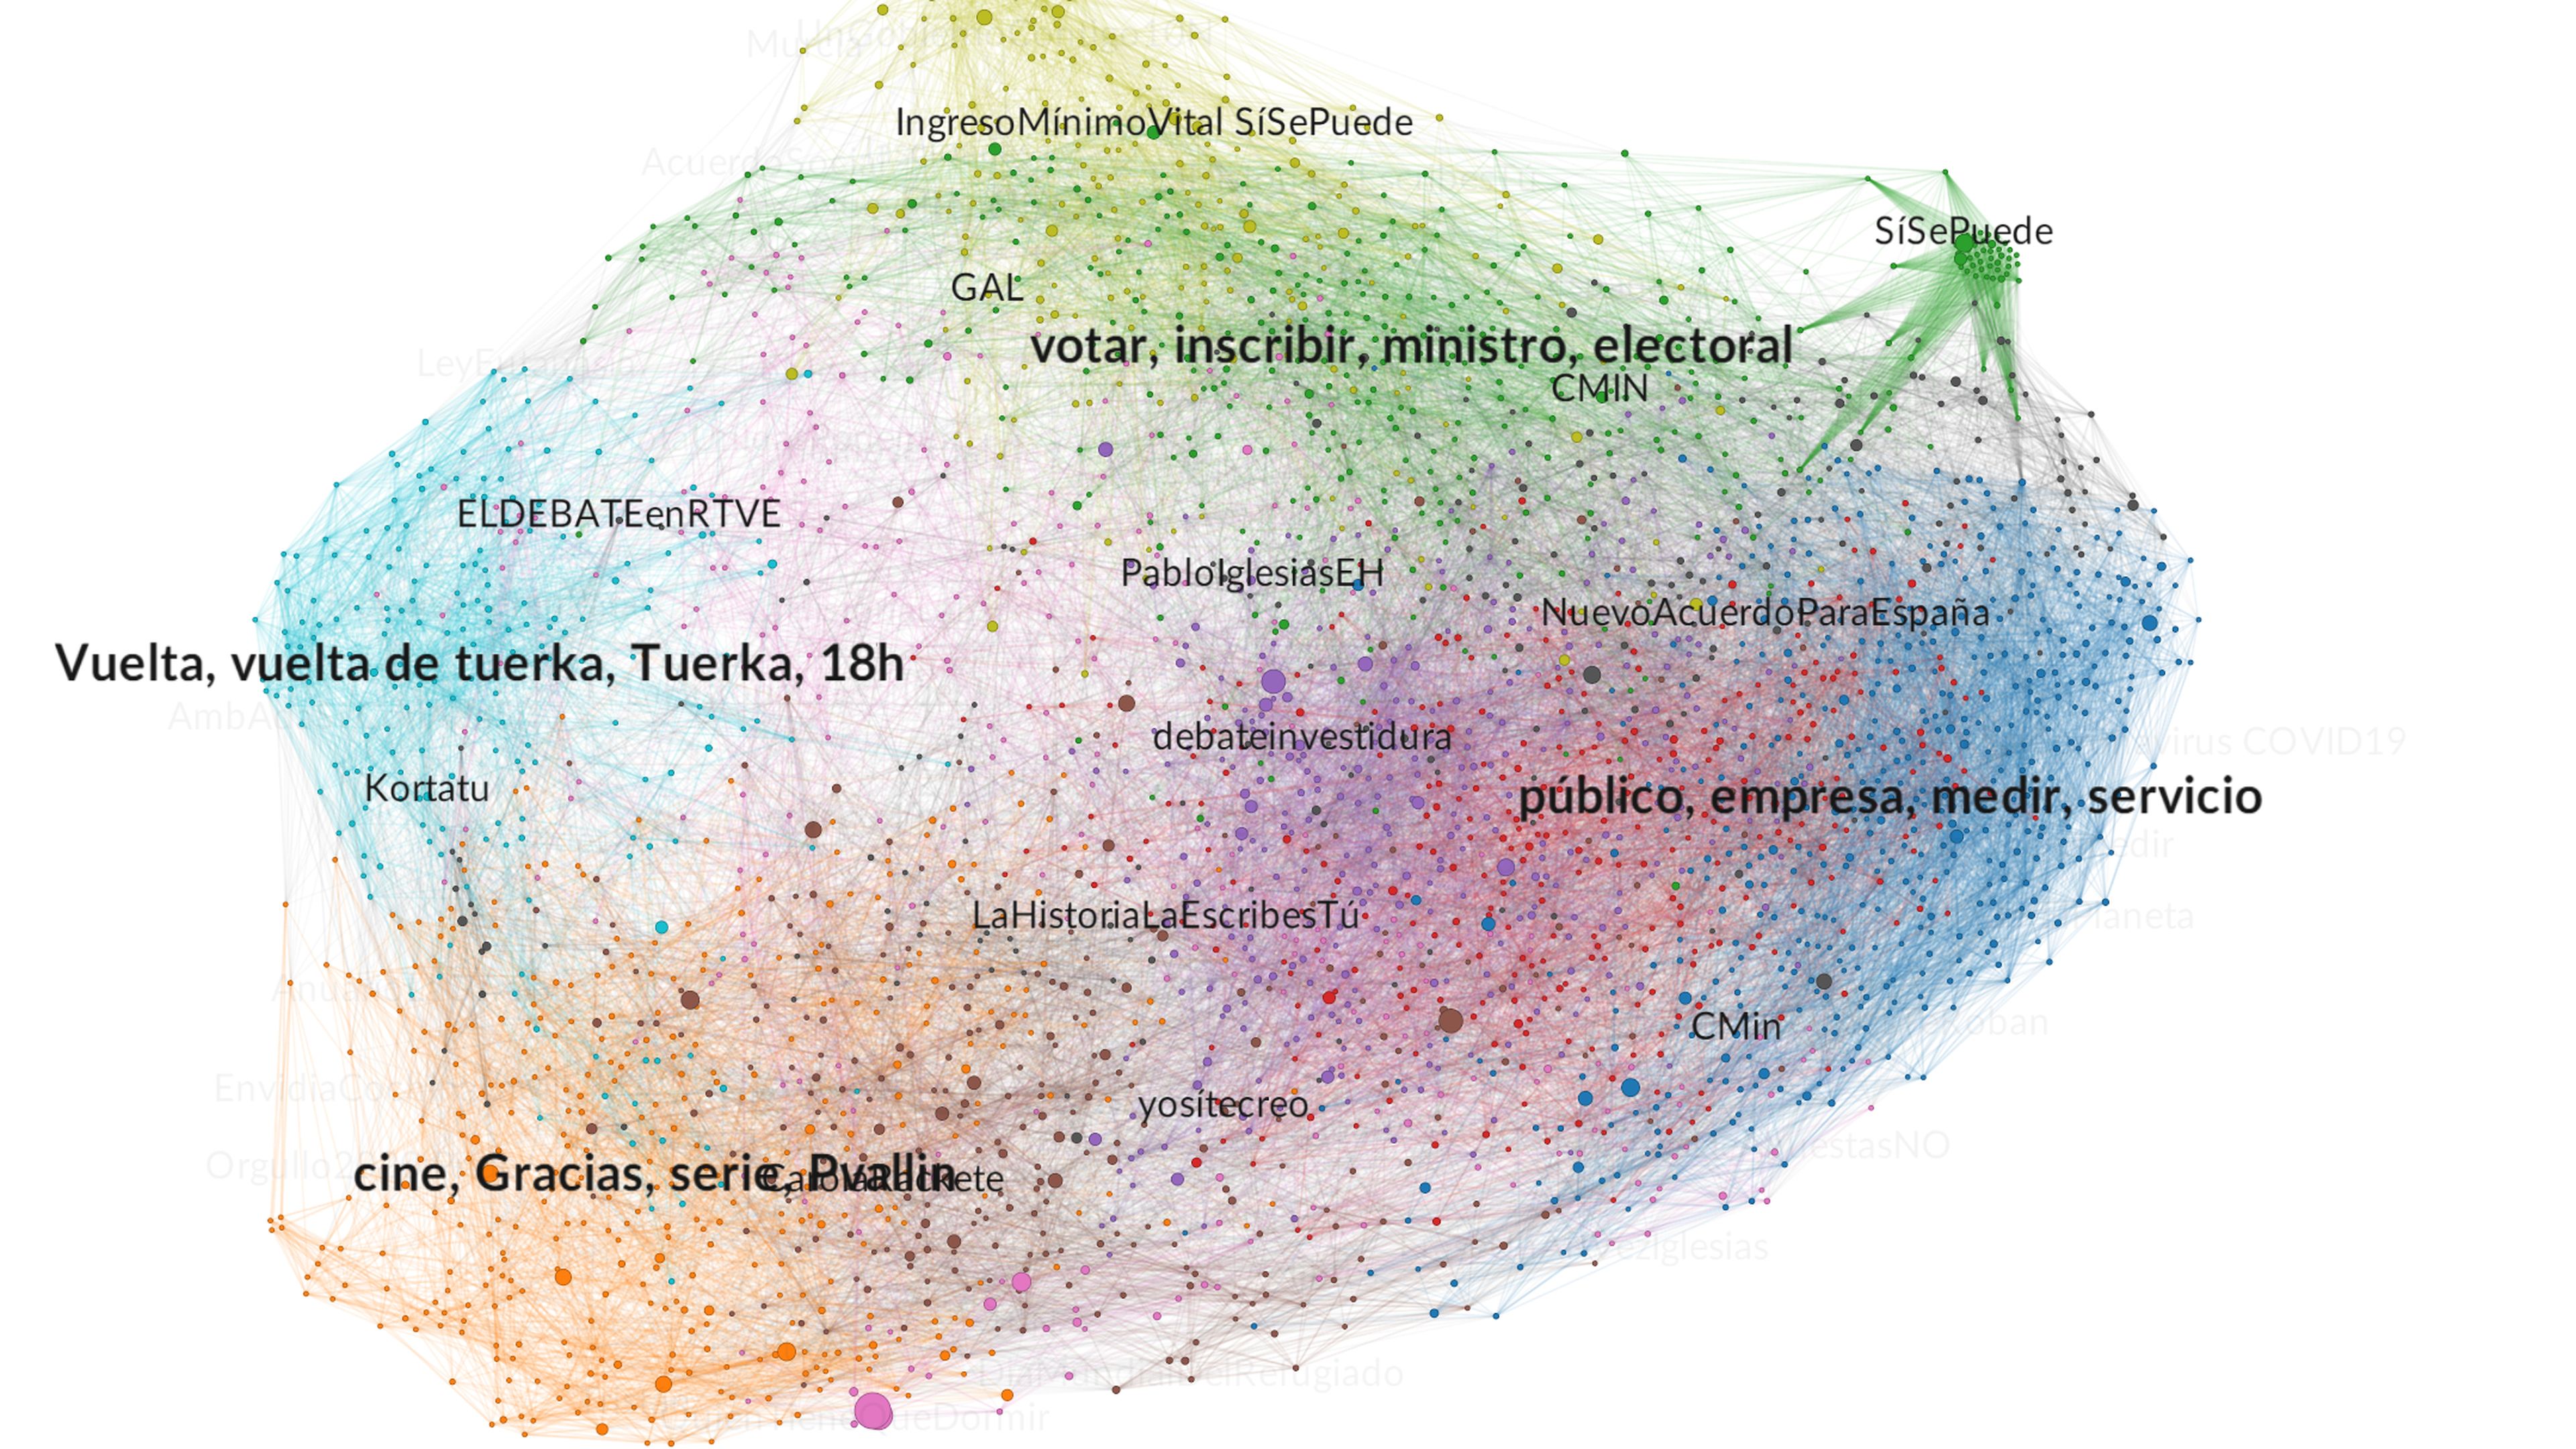 Hashtags más populares asociados a Pablo Iglesias en Twitter.